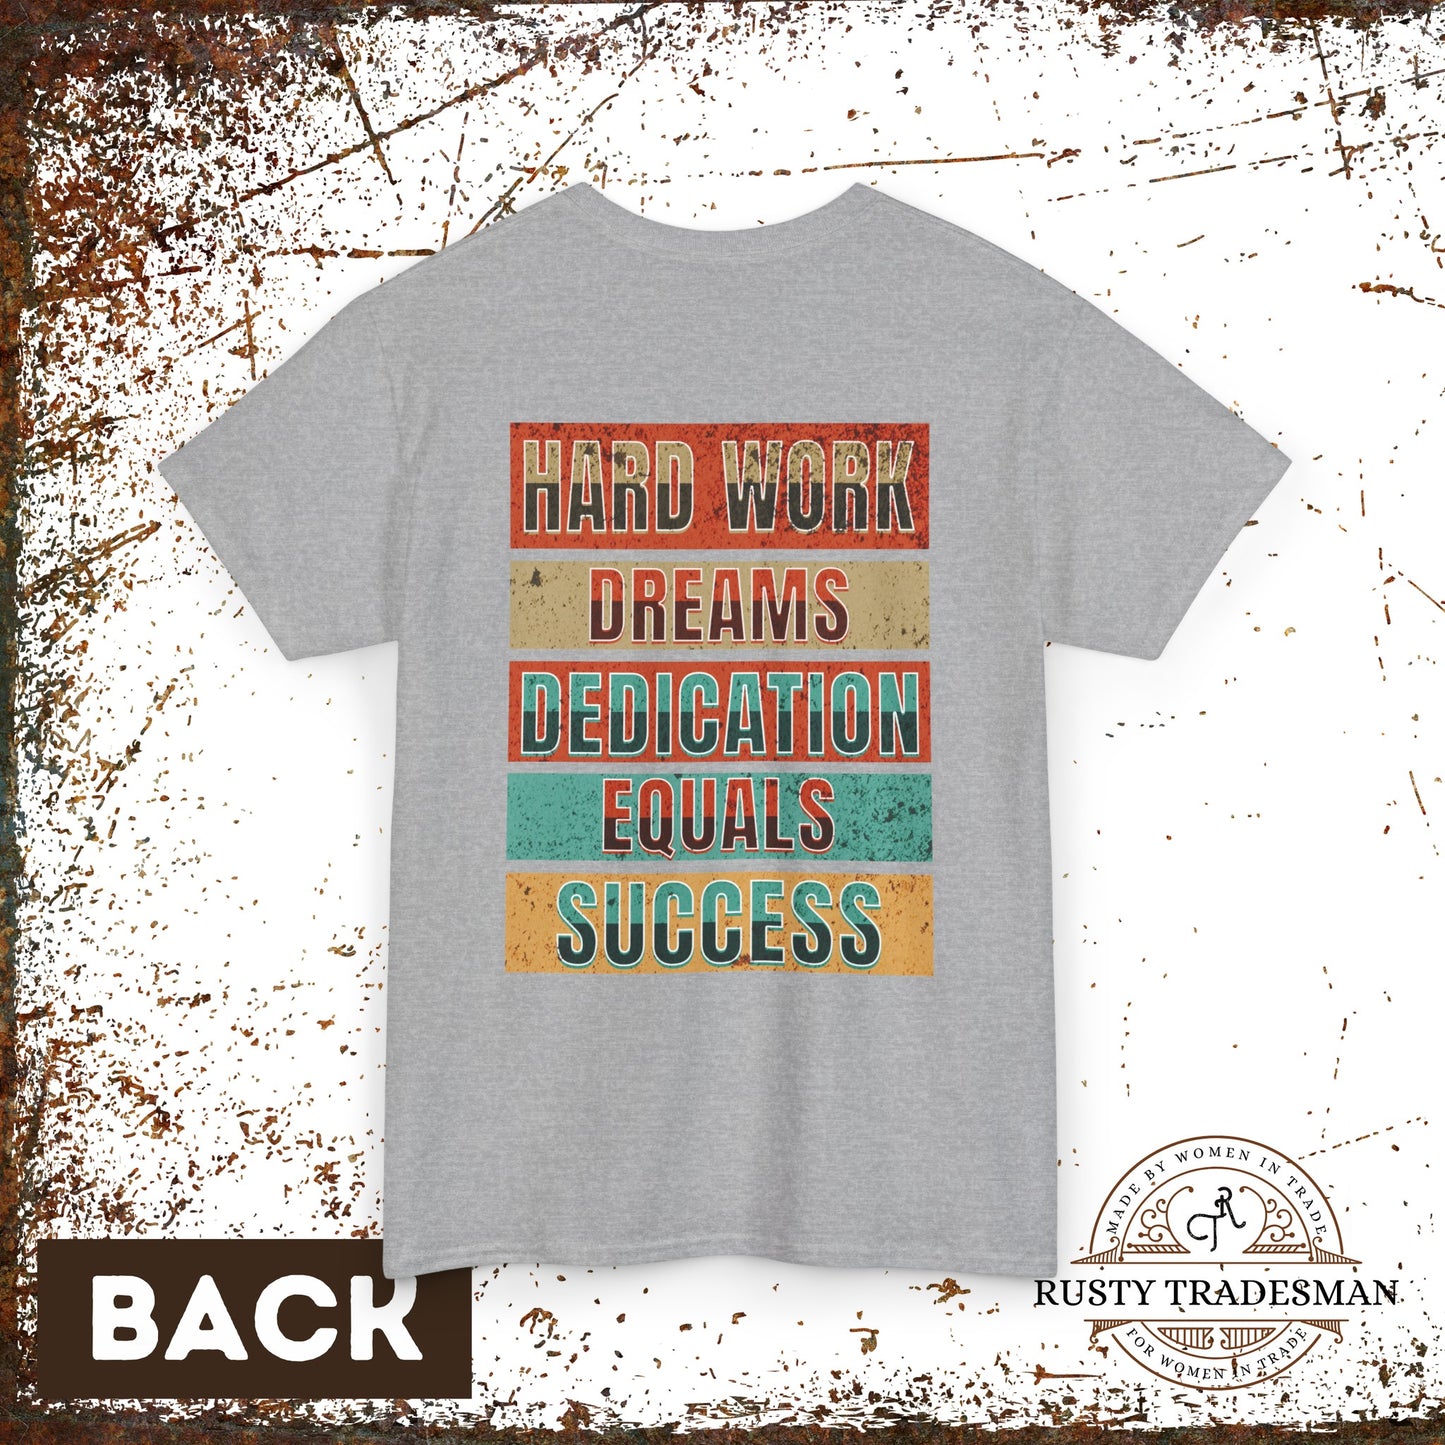 Hard work, Dreams and Dedication equals success t-shirt